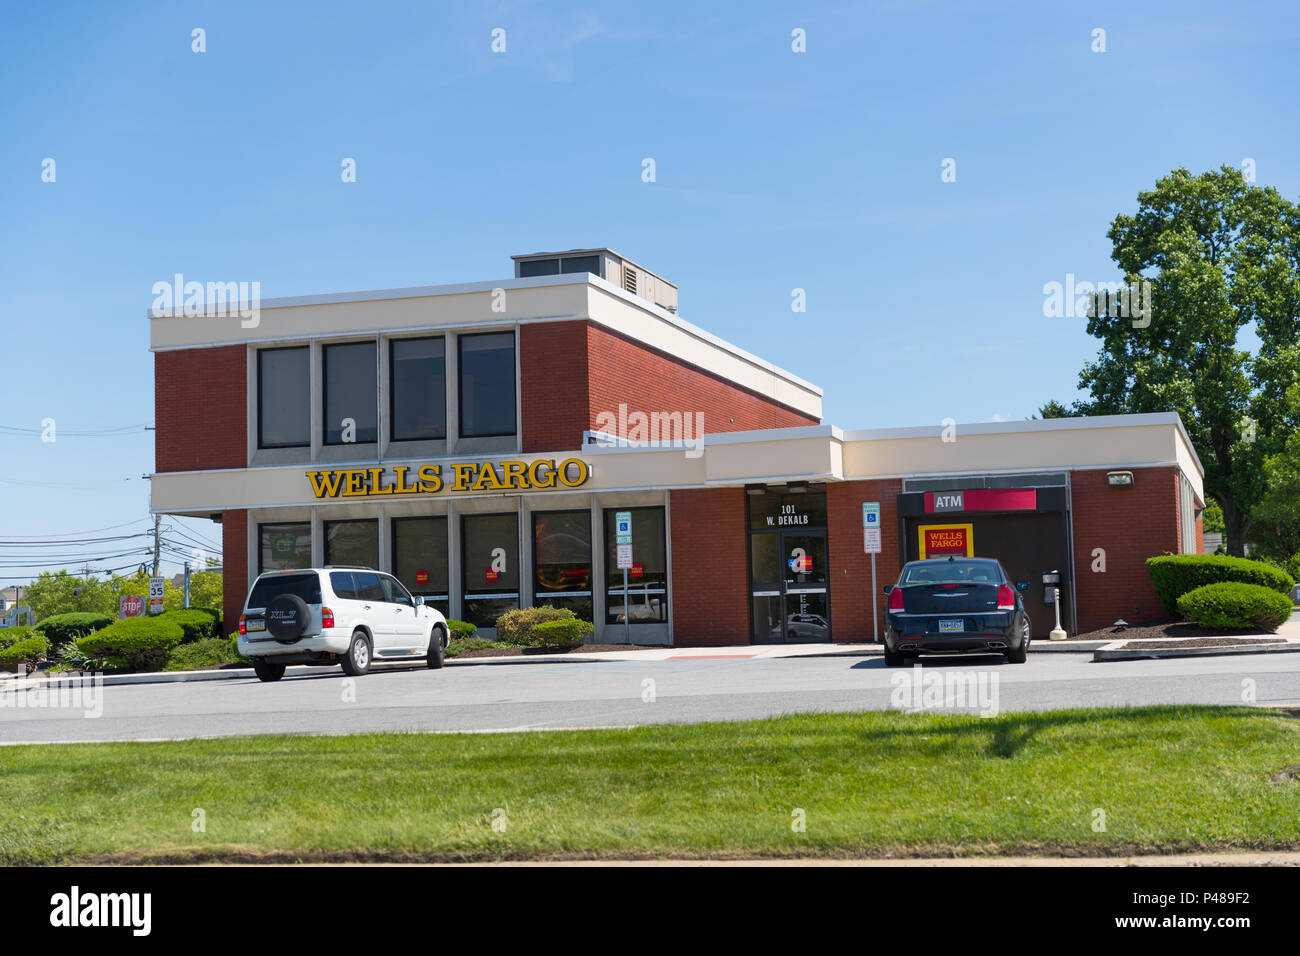 Philadelphia, Pennsylvania June 16 2018: Wells Fargo Retail Bank Branch. Wells Fargo is a Provider of Financial Services X Stock Photo